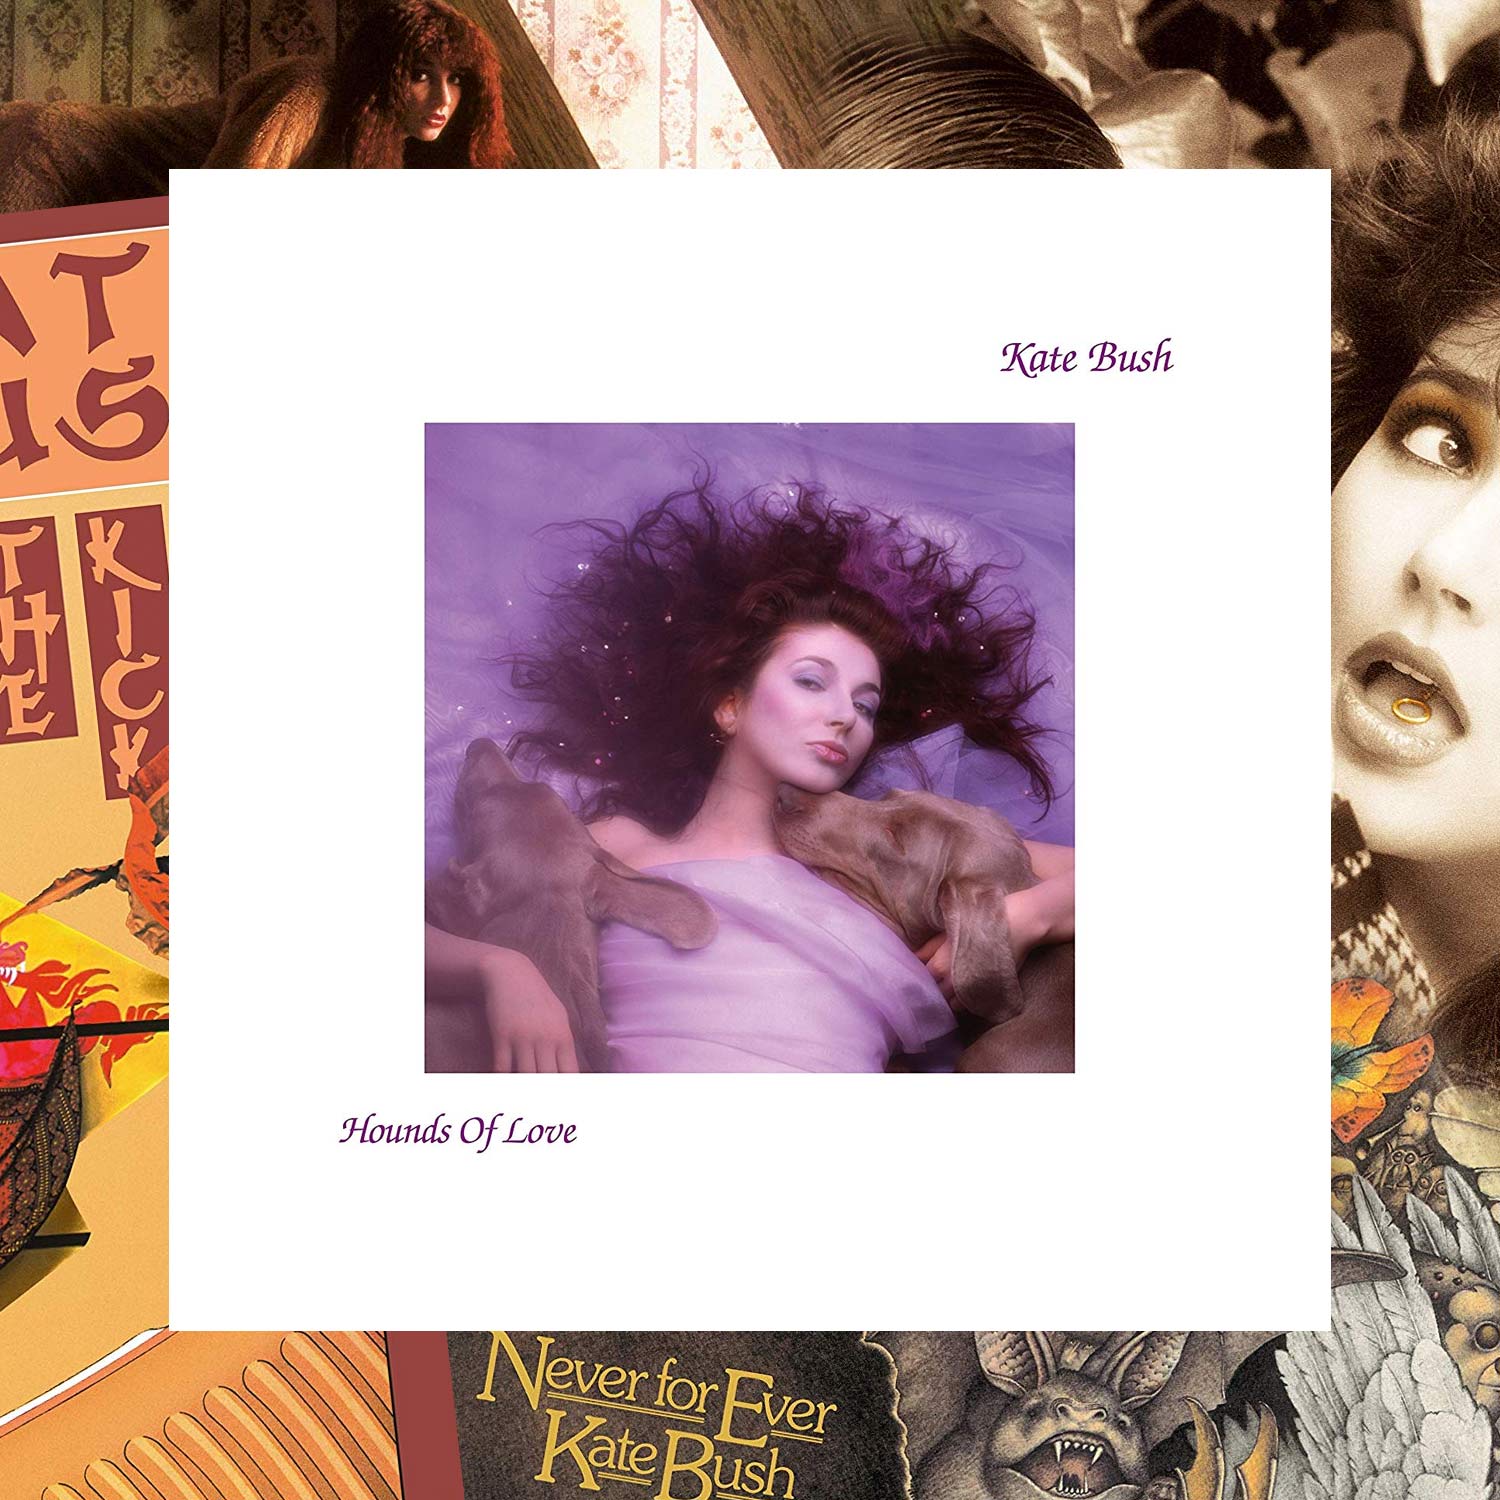 Kate Bush / remastered albums – SuperDeluxeEdition